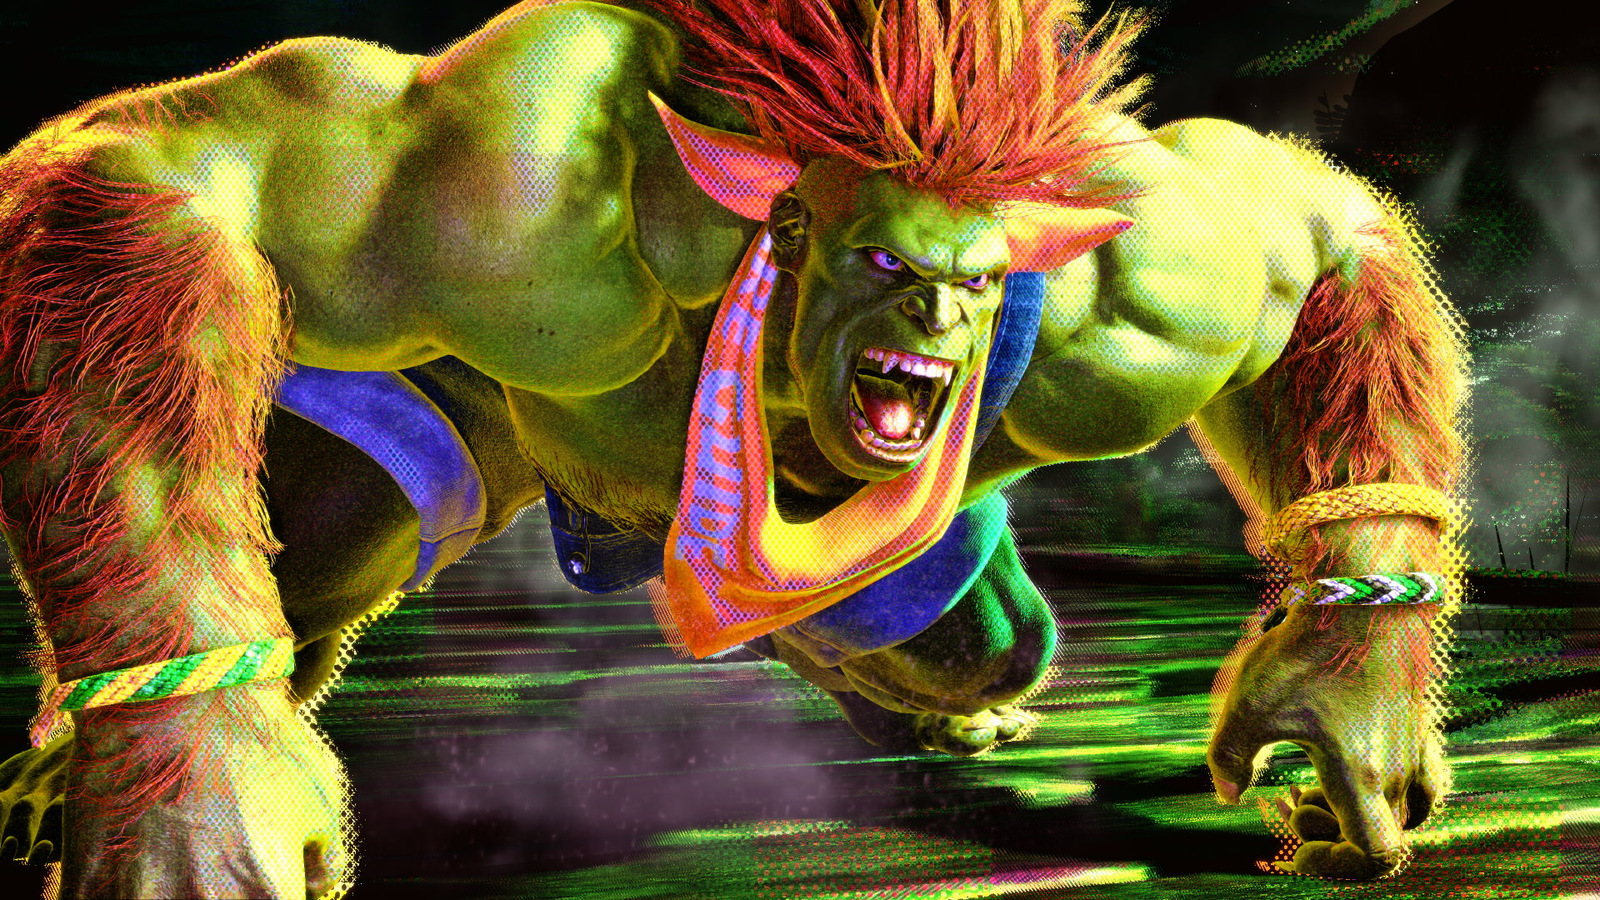 Guile returns in Street Fighter 6 – PlayStation.Blog